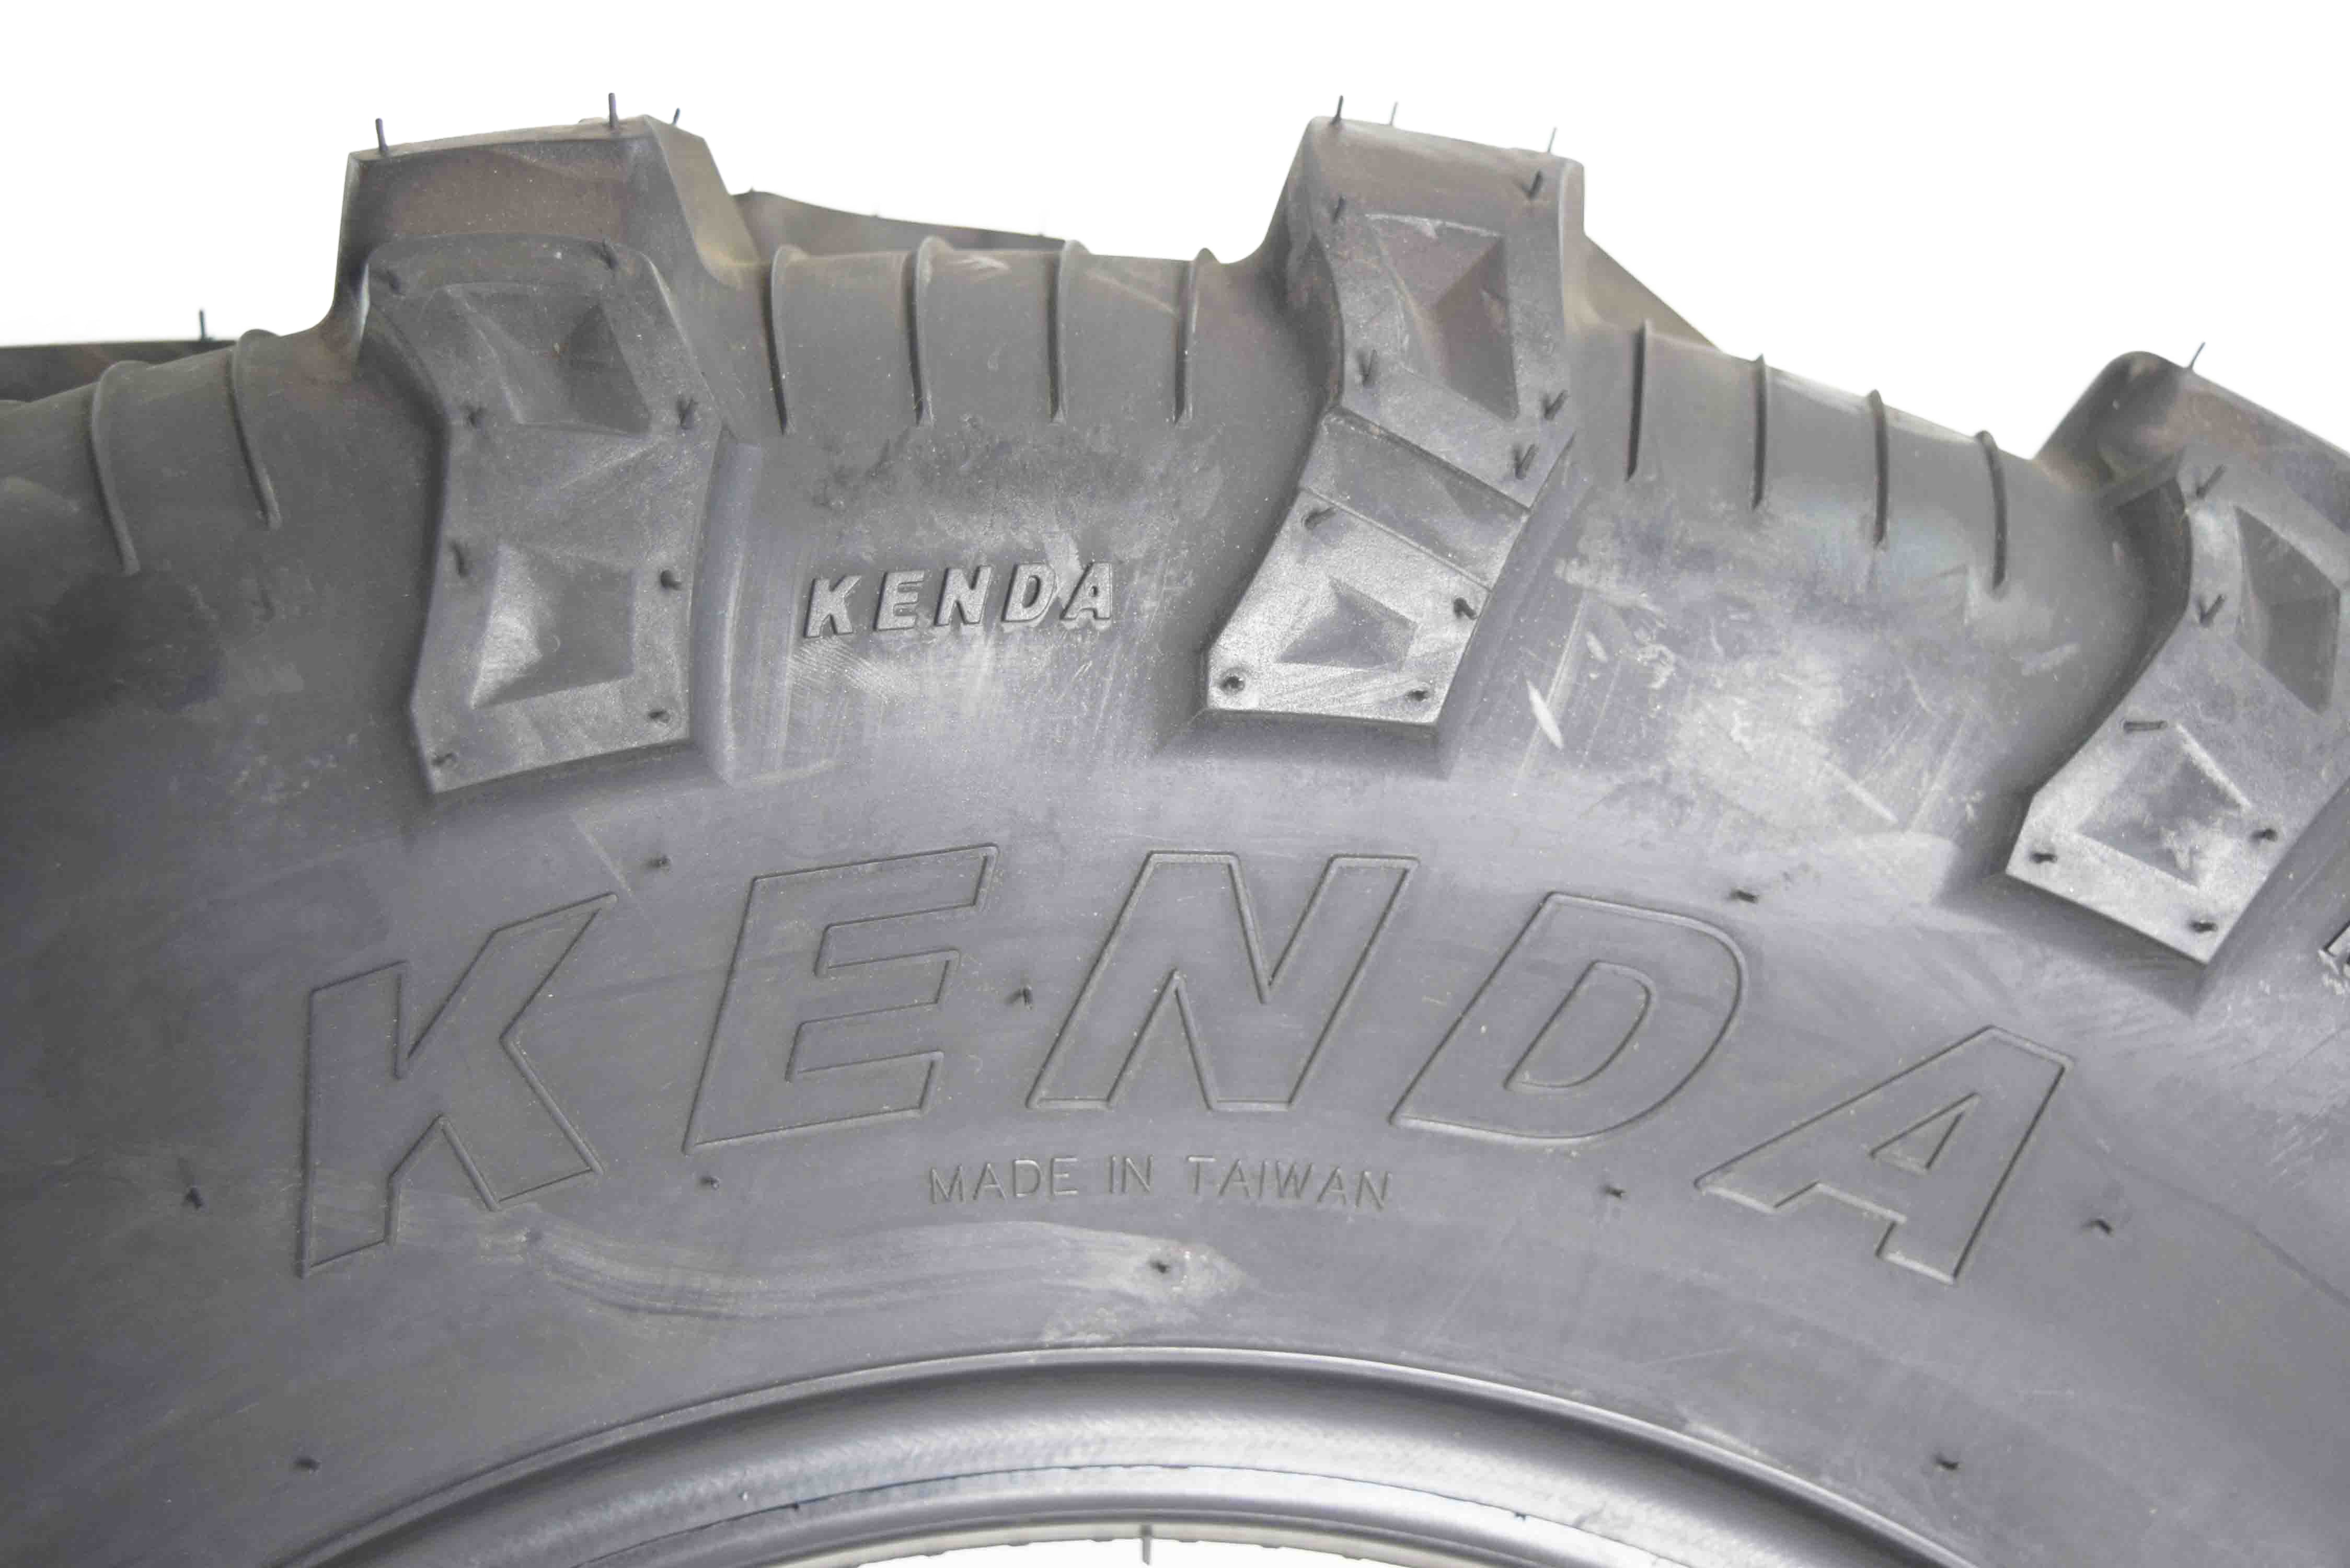 Kenda Bear Claw EVO  28x9-14 Front ATV/UTV Tires 2 Pack with Bottle Opener Keychain